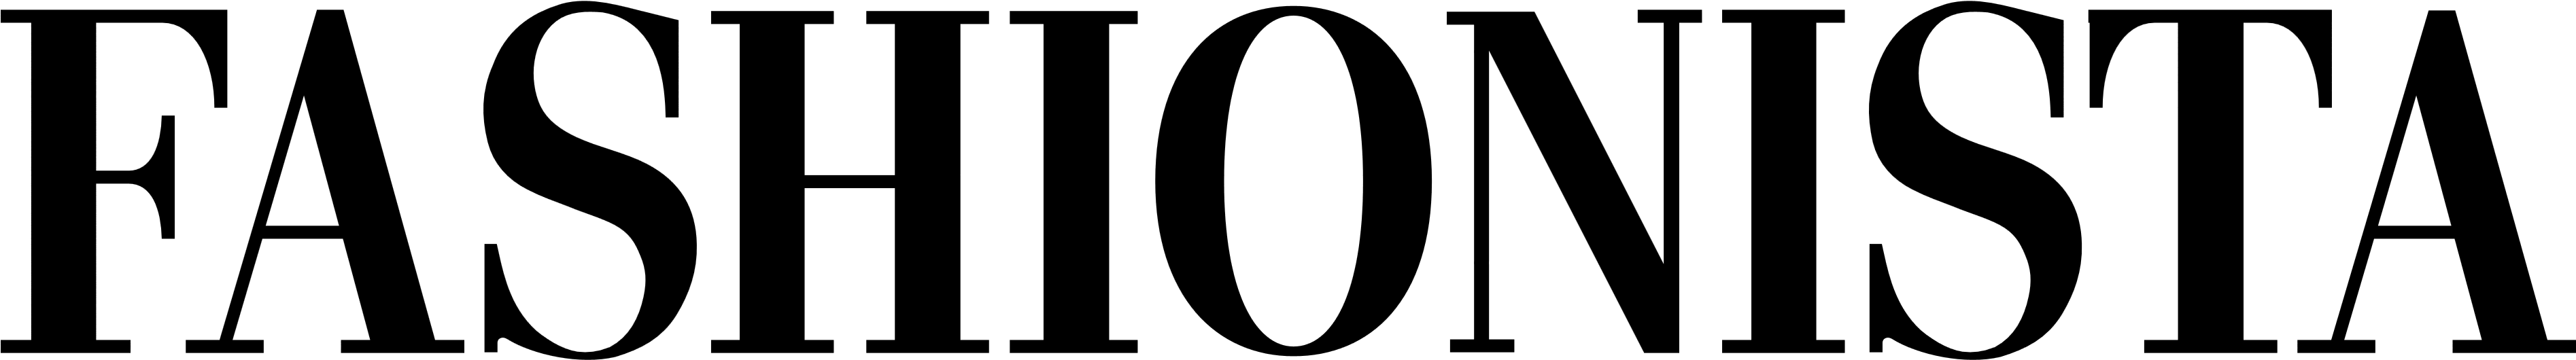 Fashionista Logo, Wordmark, Black - Fashionista Logo Transparent (3960x666)